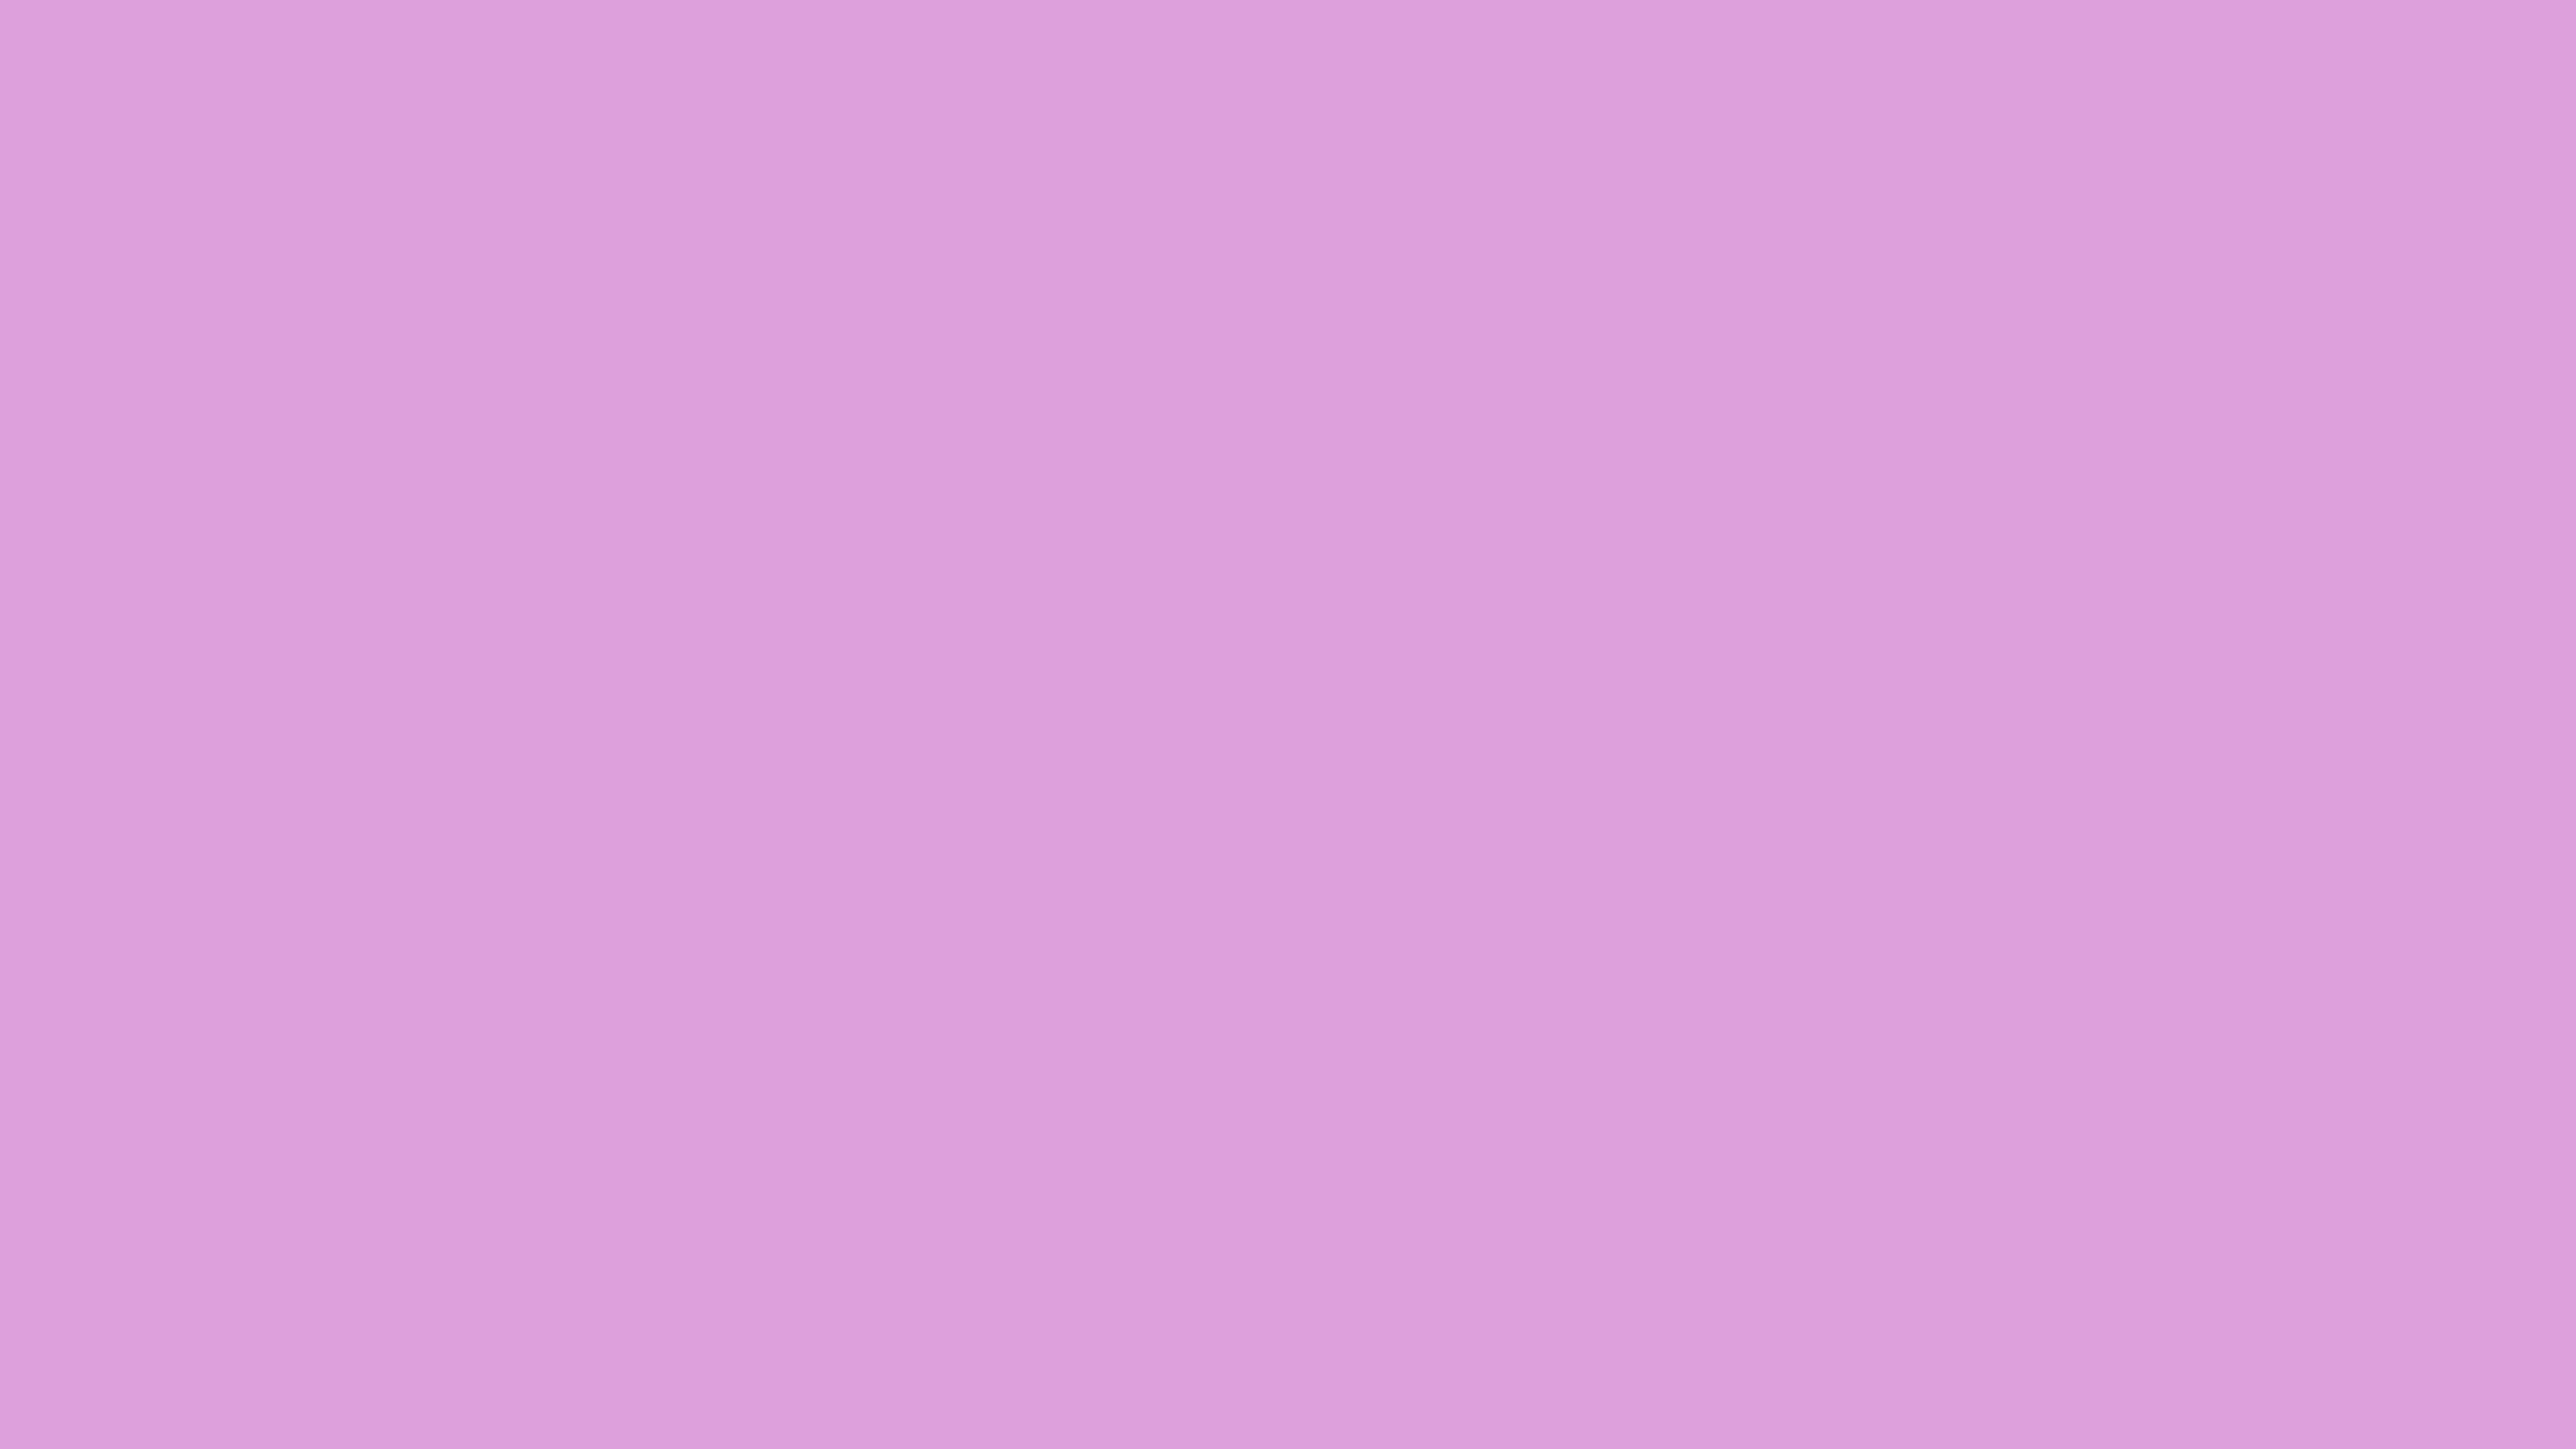 4096x2304 Medium Lavender Magenta Solid Color Background